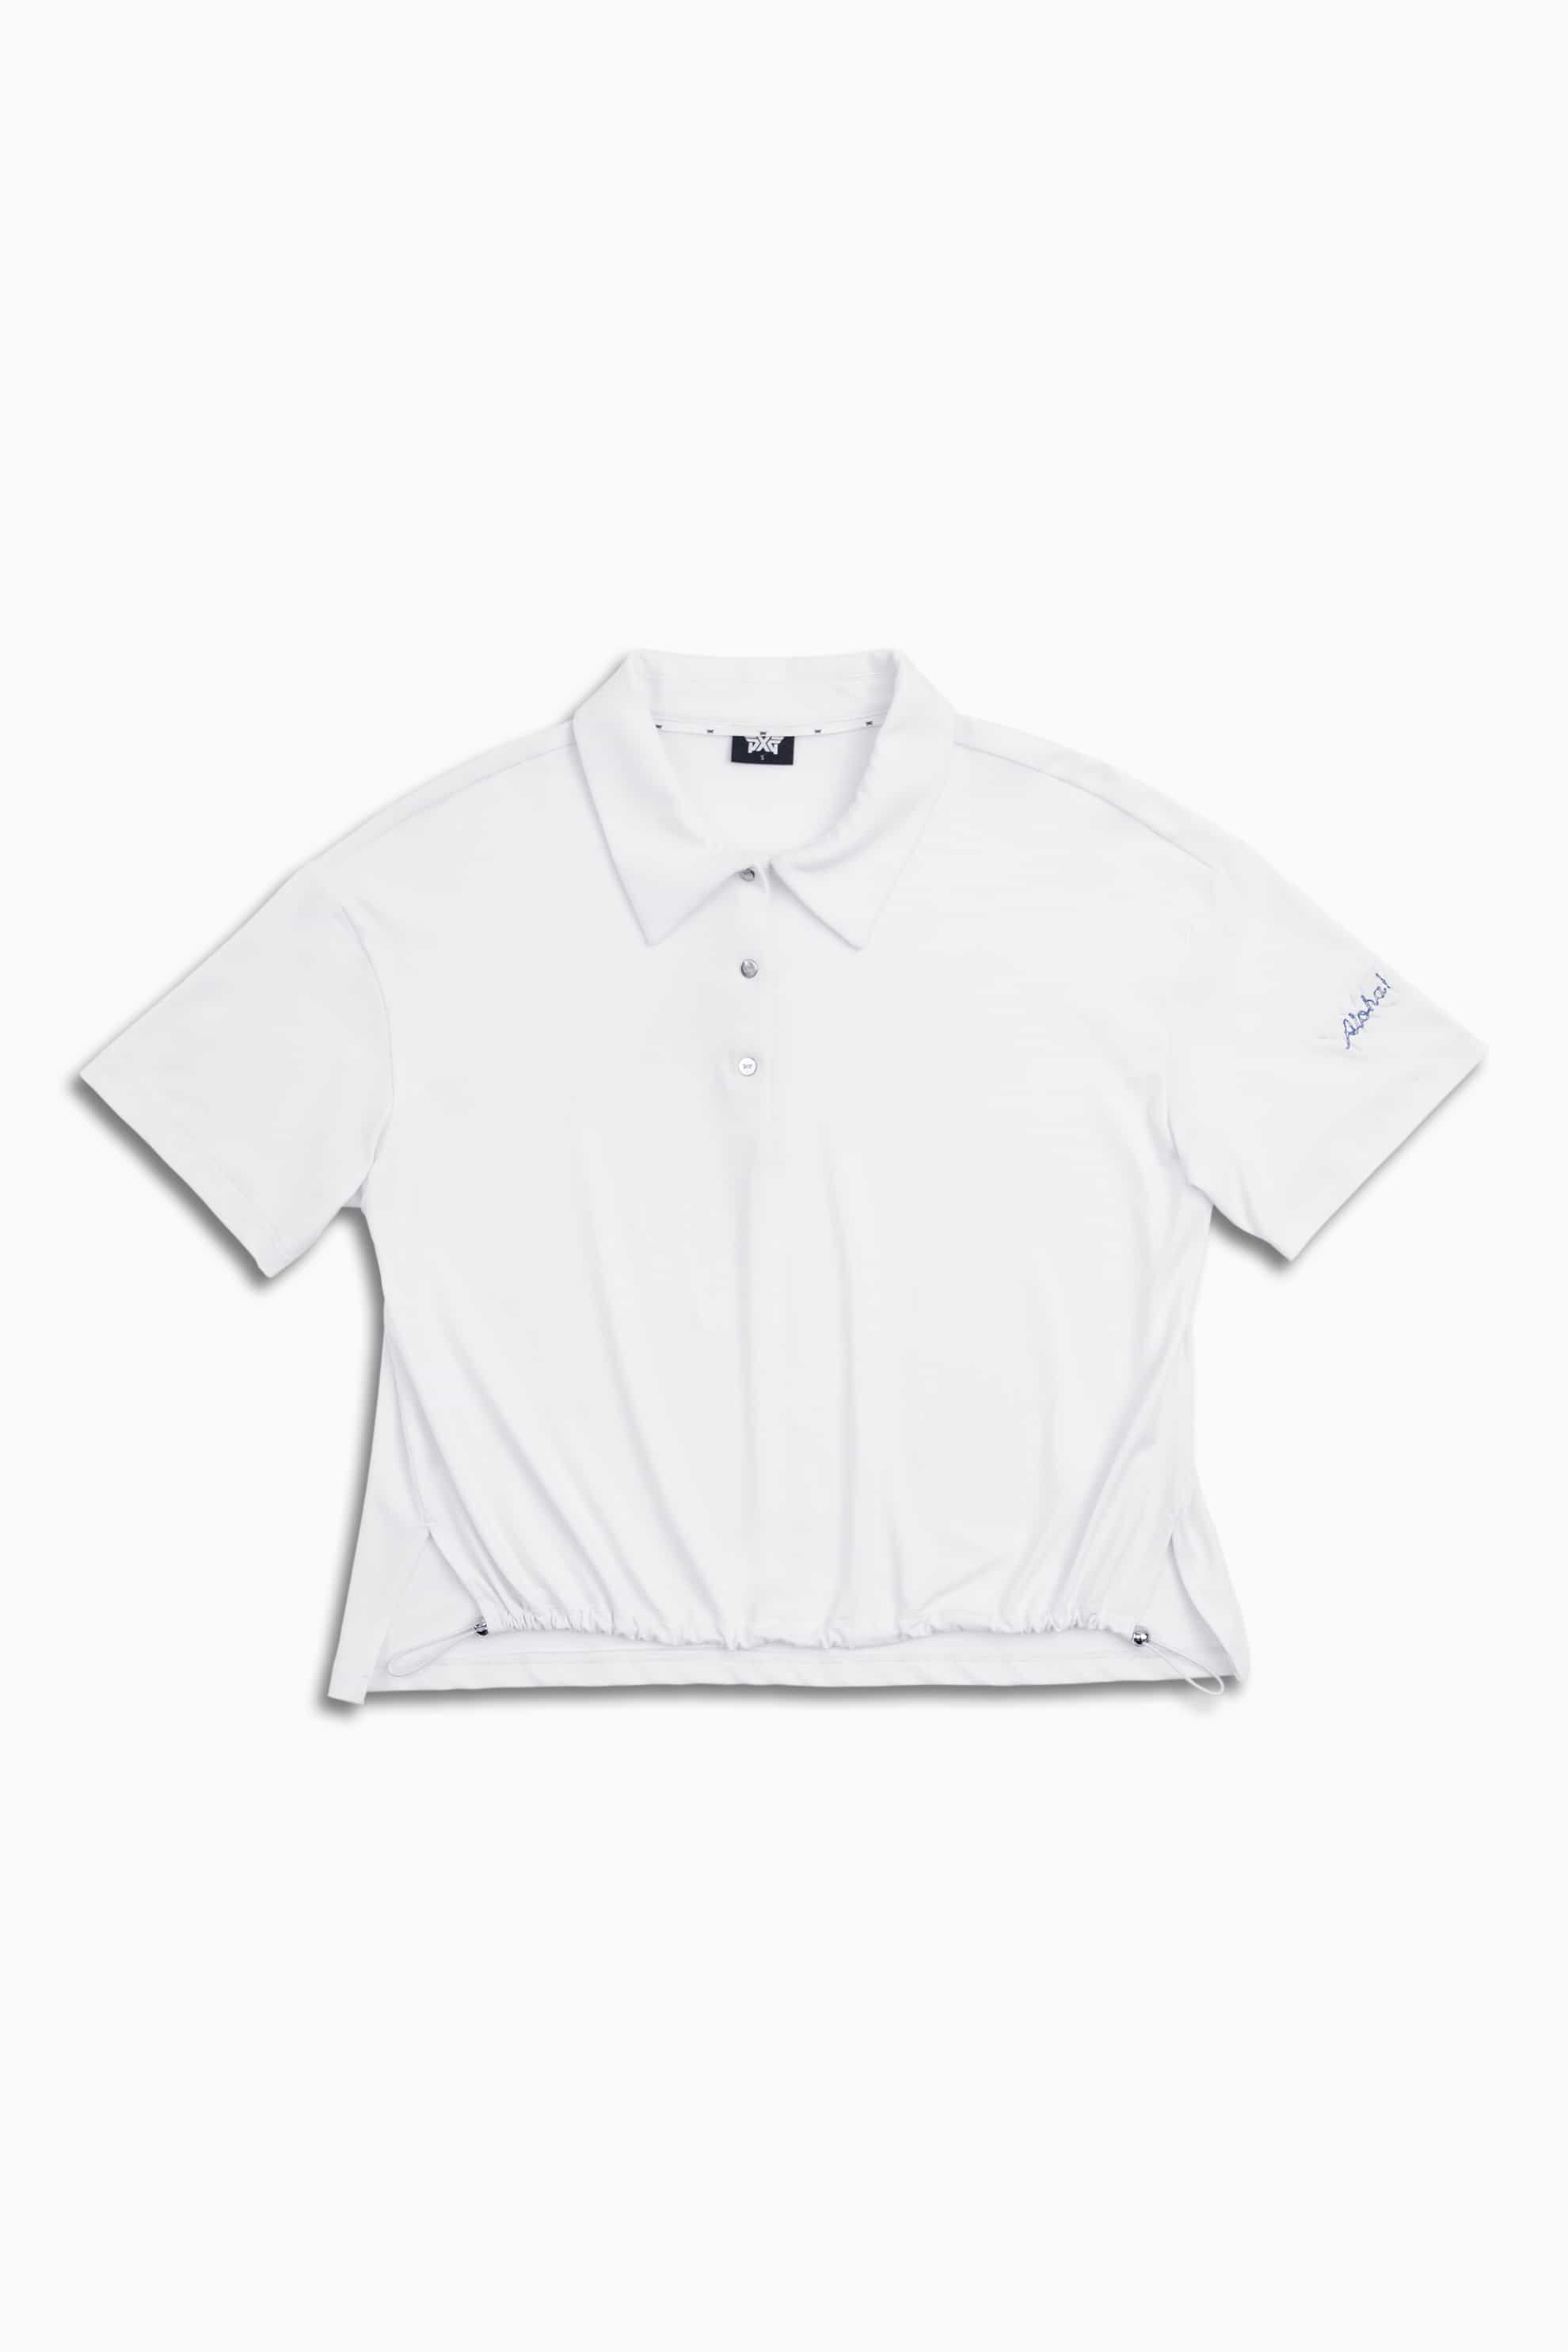 Shop Women's Golf シャツ＆ポロシャツ | PXG JP